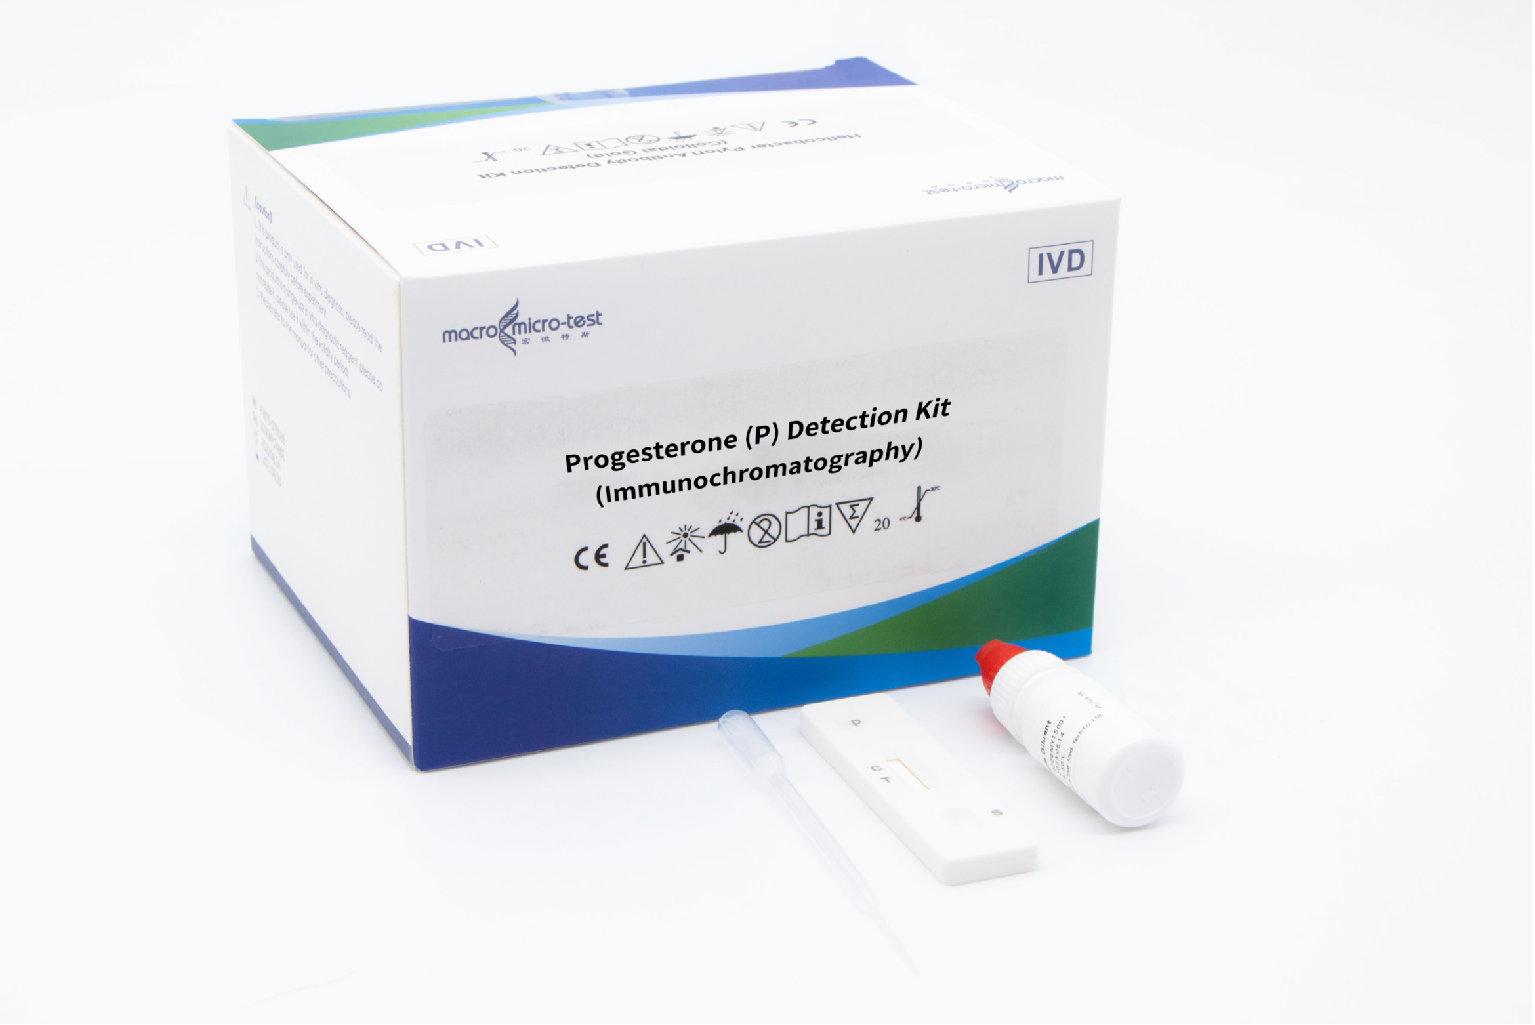 Progesterone (P) Detection Kit (Immunochromatography) – Macro & Micro-Test